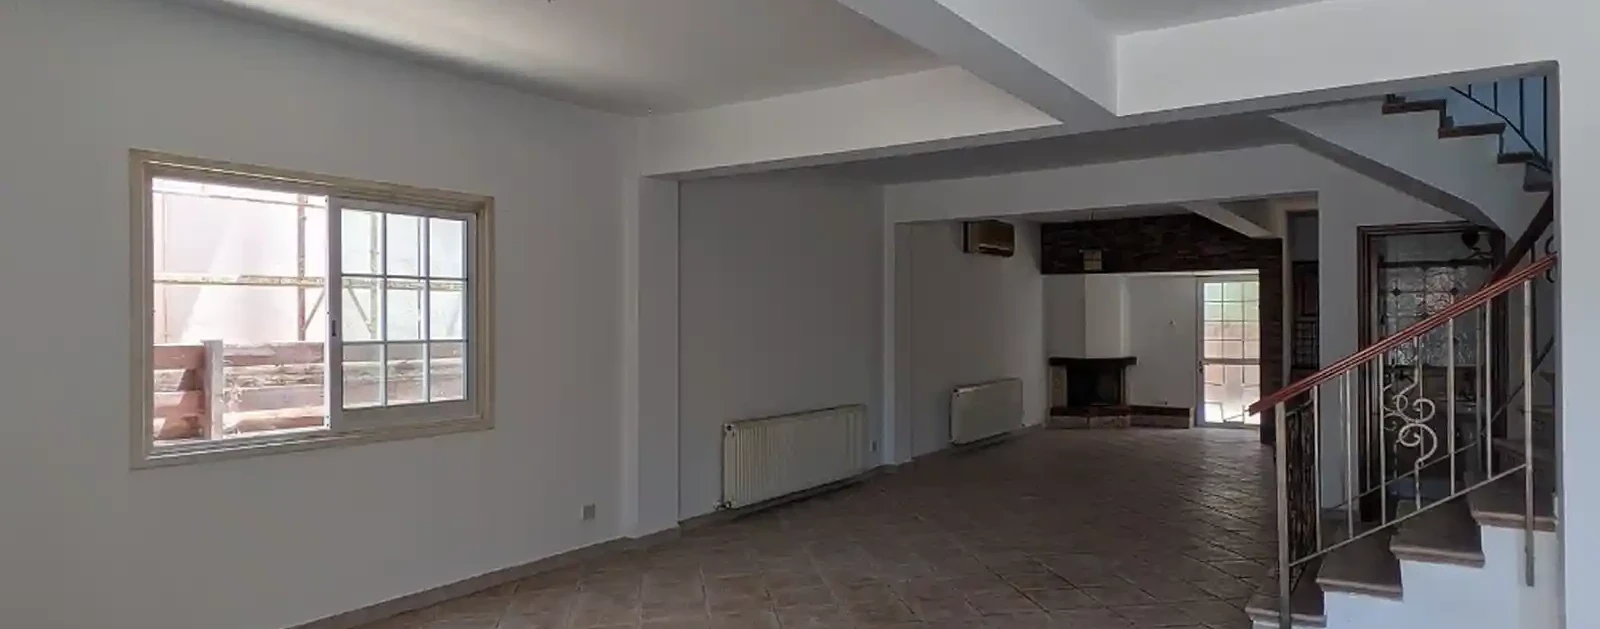 3-bedroom semi-detached fоr sаle €279.000, image 1